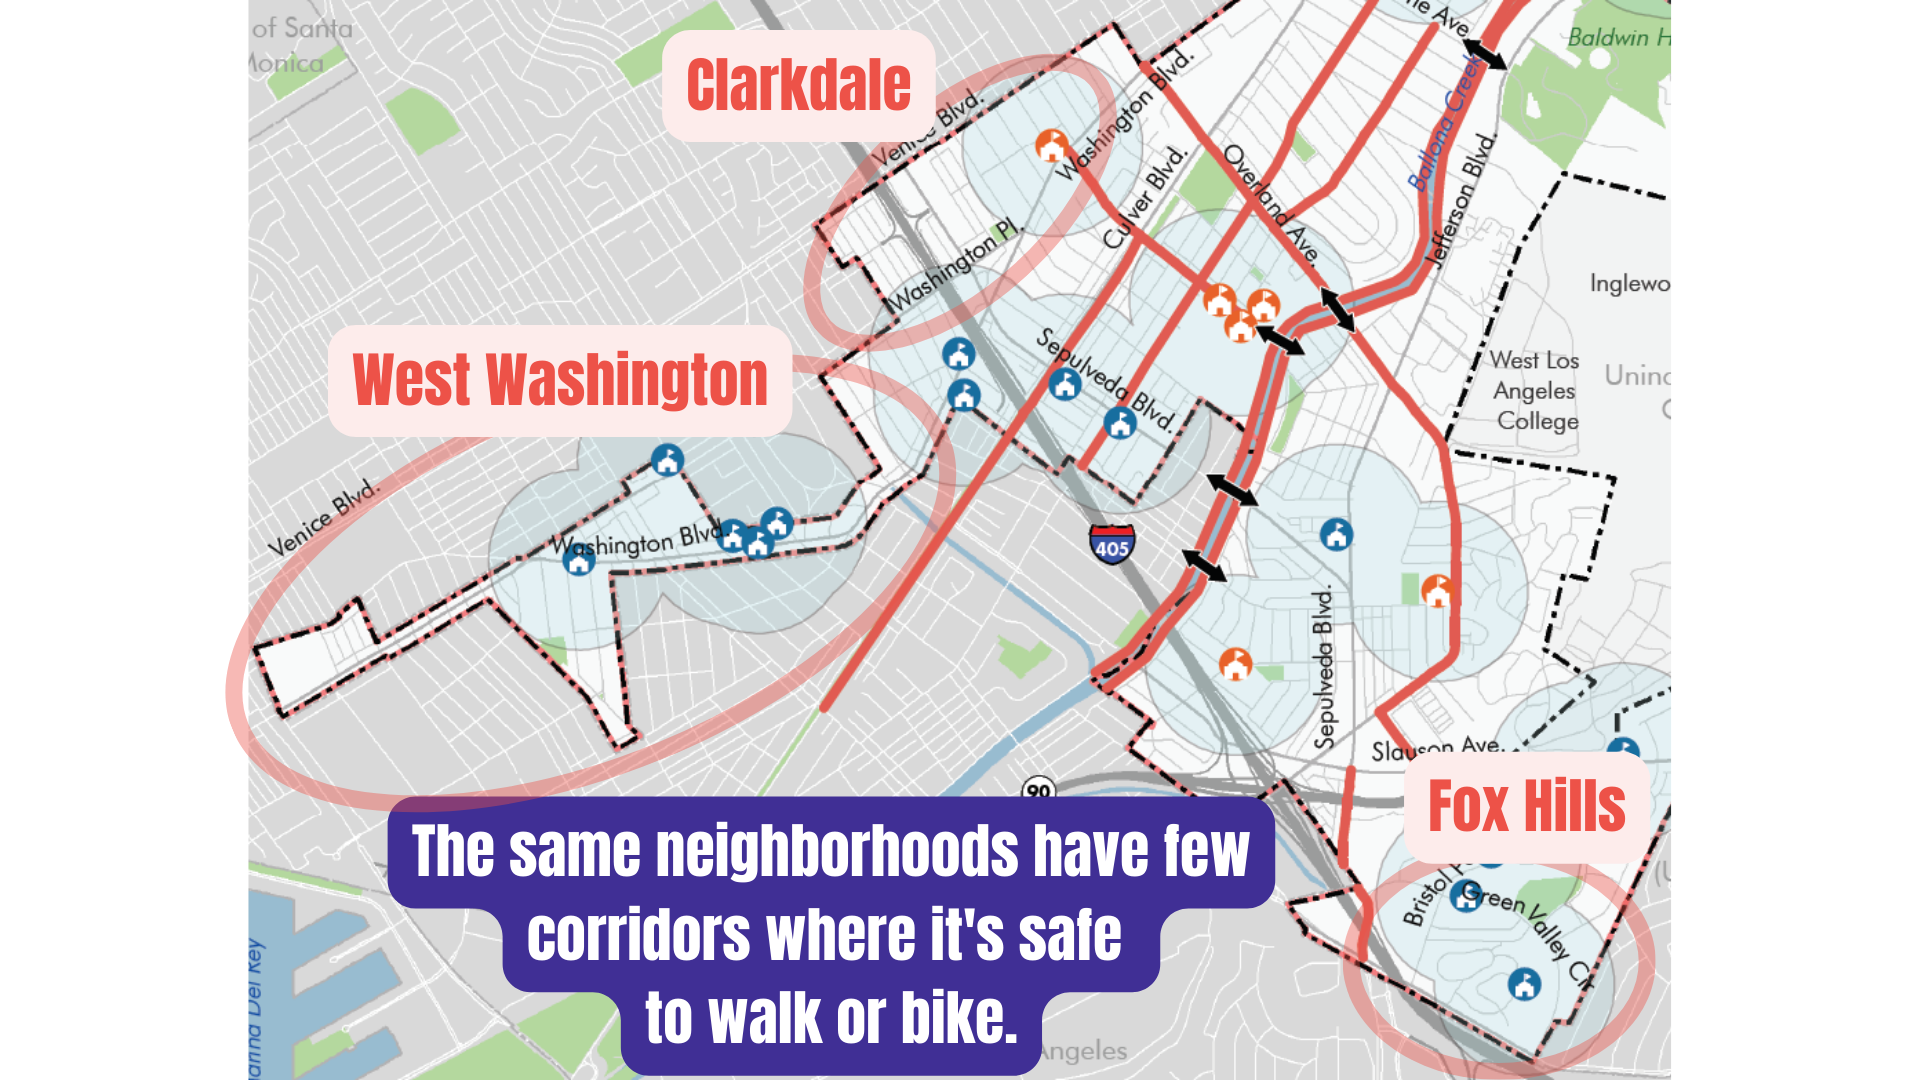  The same neighborhoods have few corridors where it's safe  to walk or bike. 